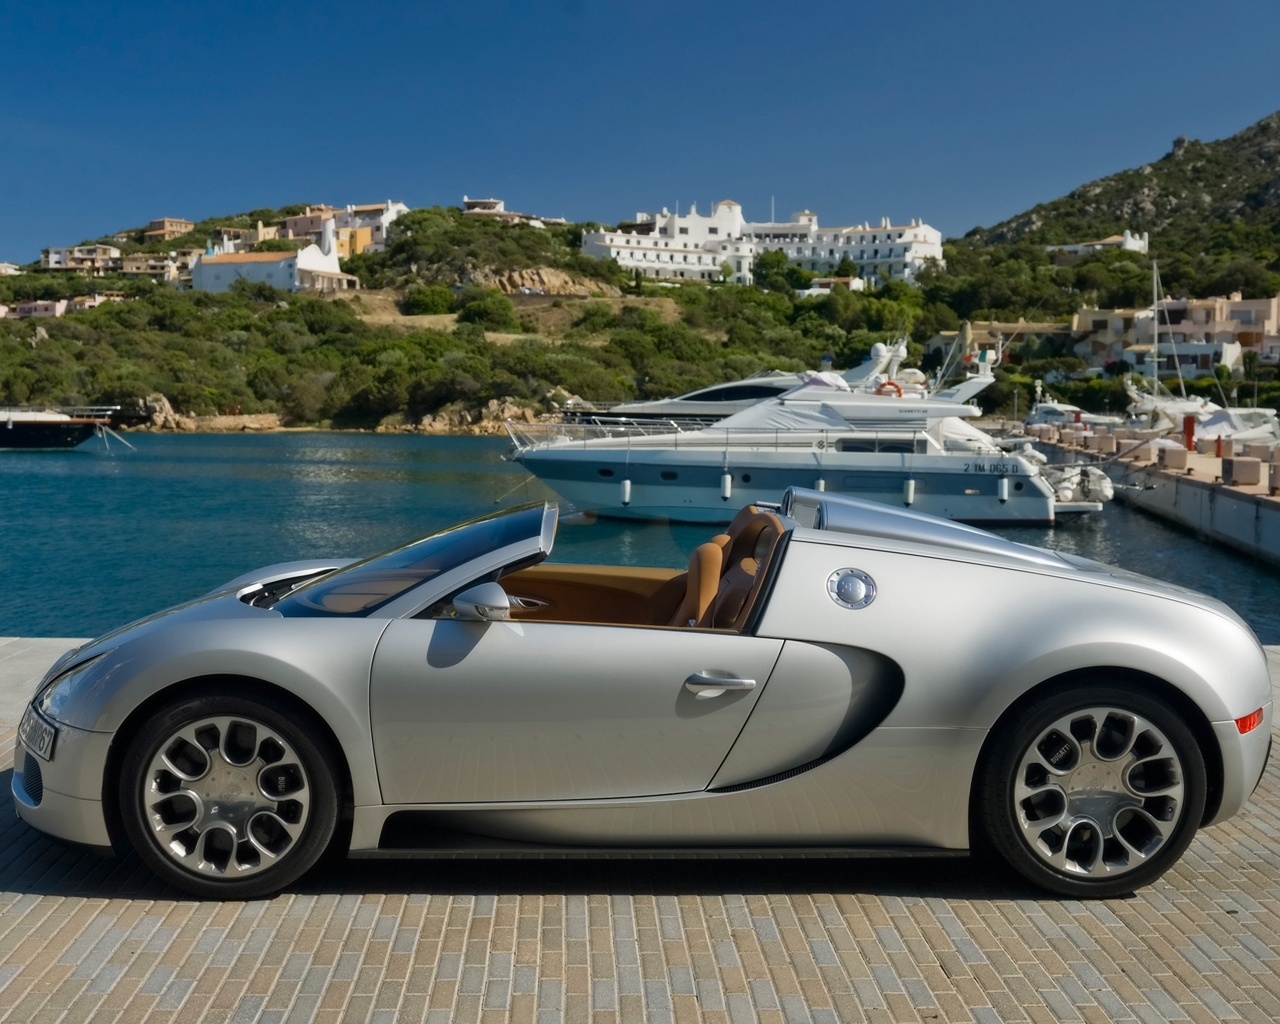 Bugatti Veyron 16.4 Grand Sport in Sardinia 2010 - Side for 1280 x 1024 resolution